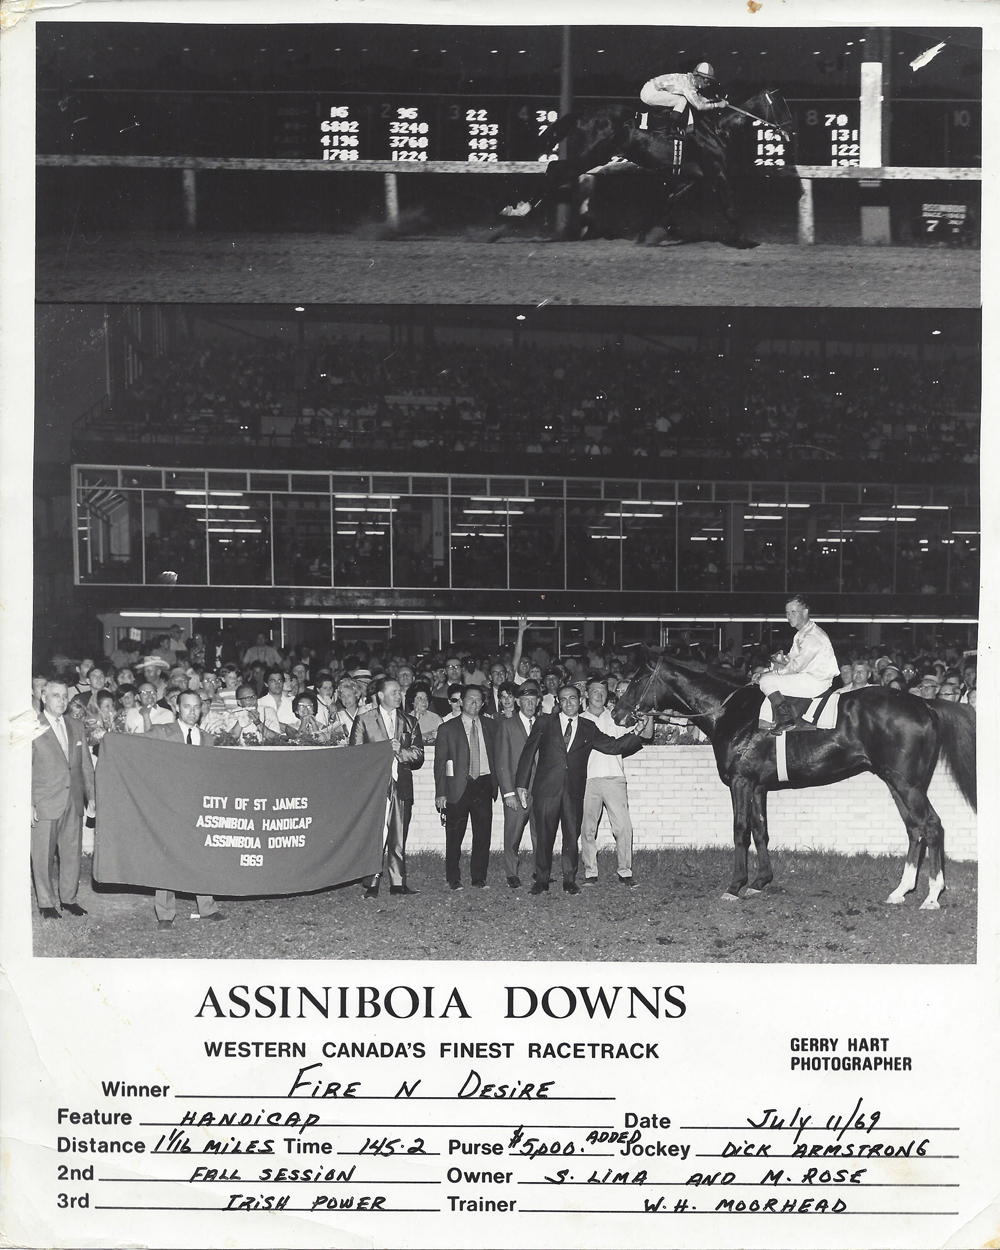 Fire N Desire wins City of St. James Assiniboia Handicap. July 11, 1969. 